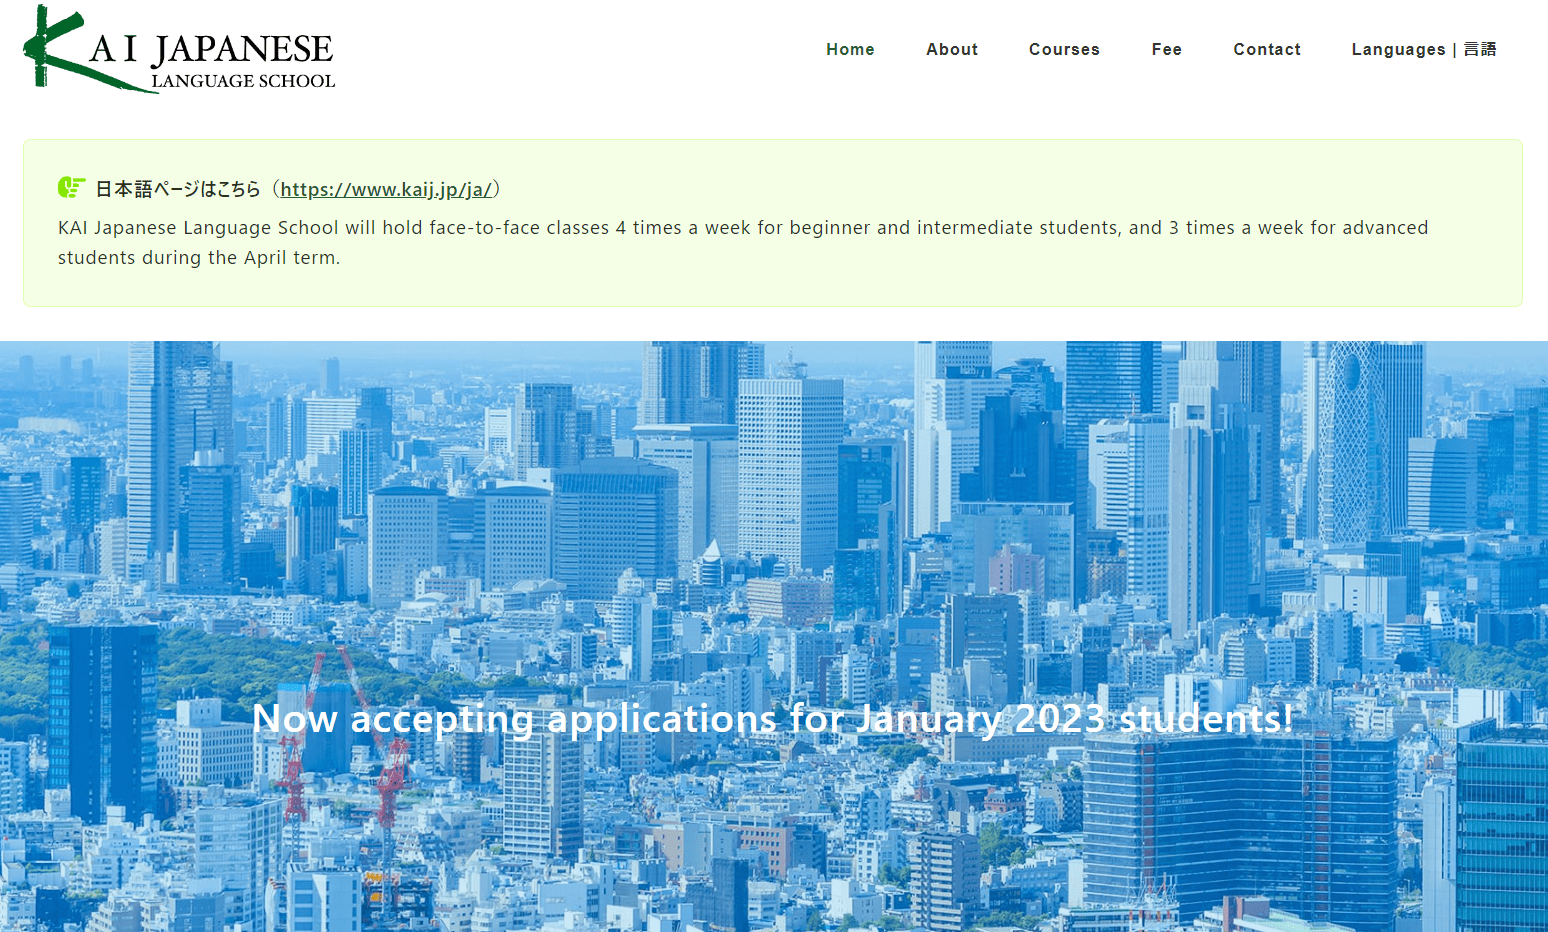 Kai Japanese Language School website